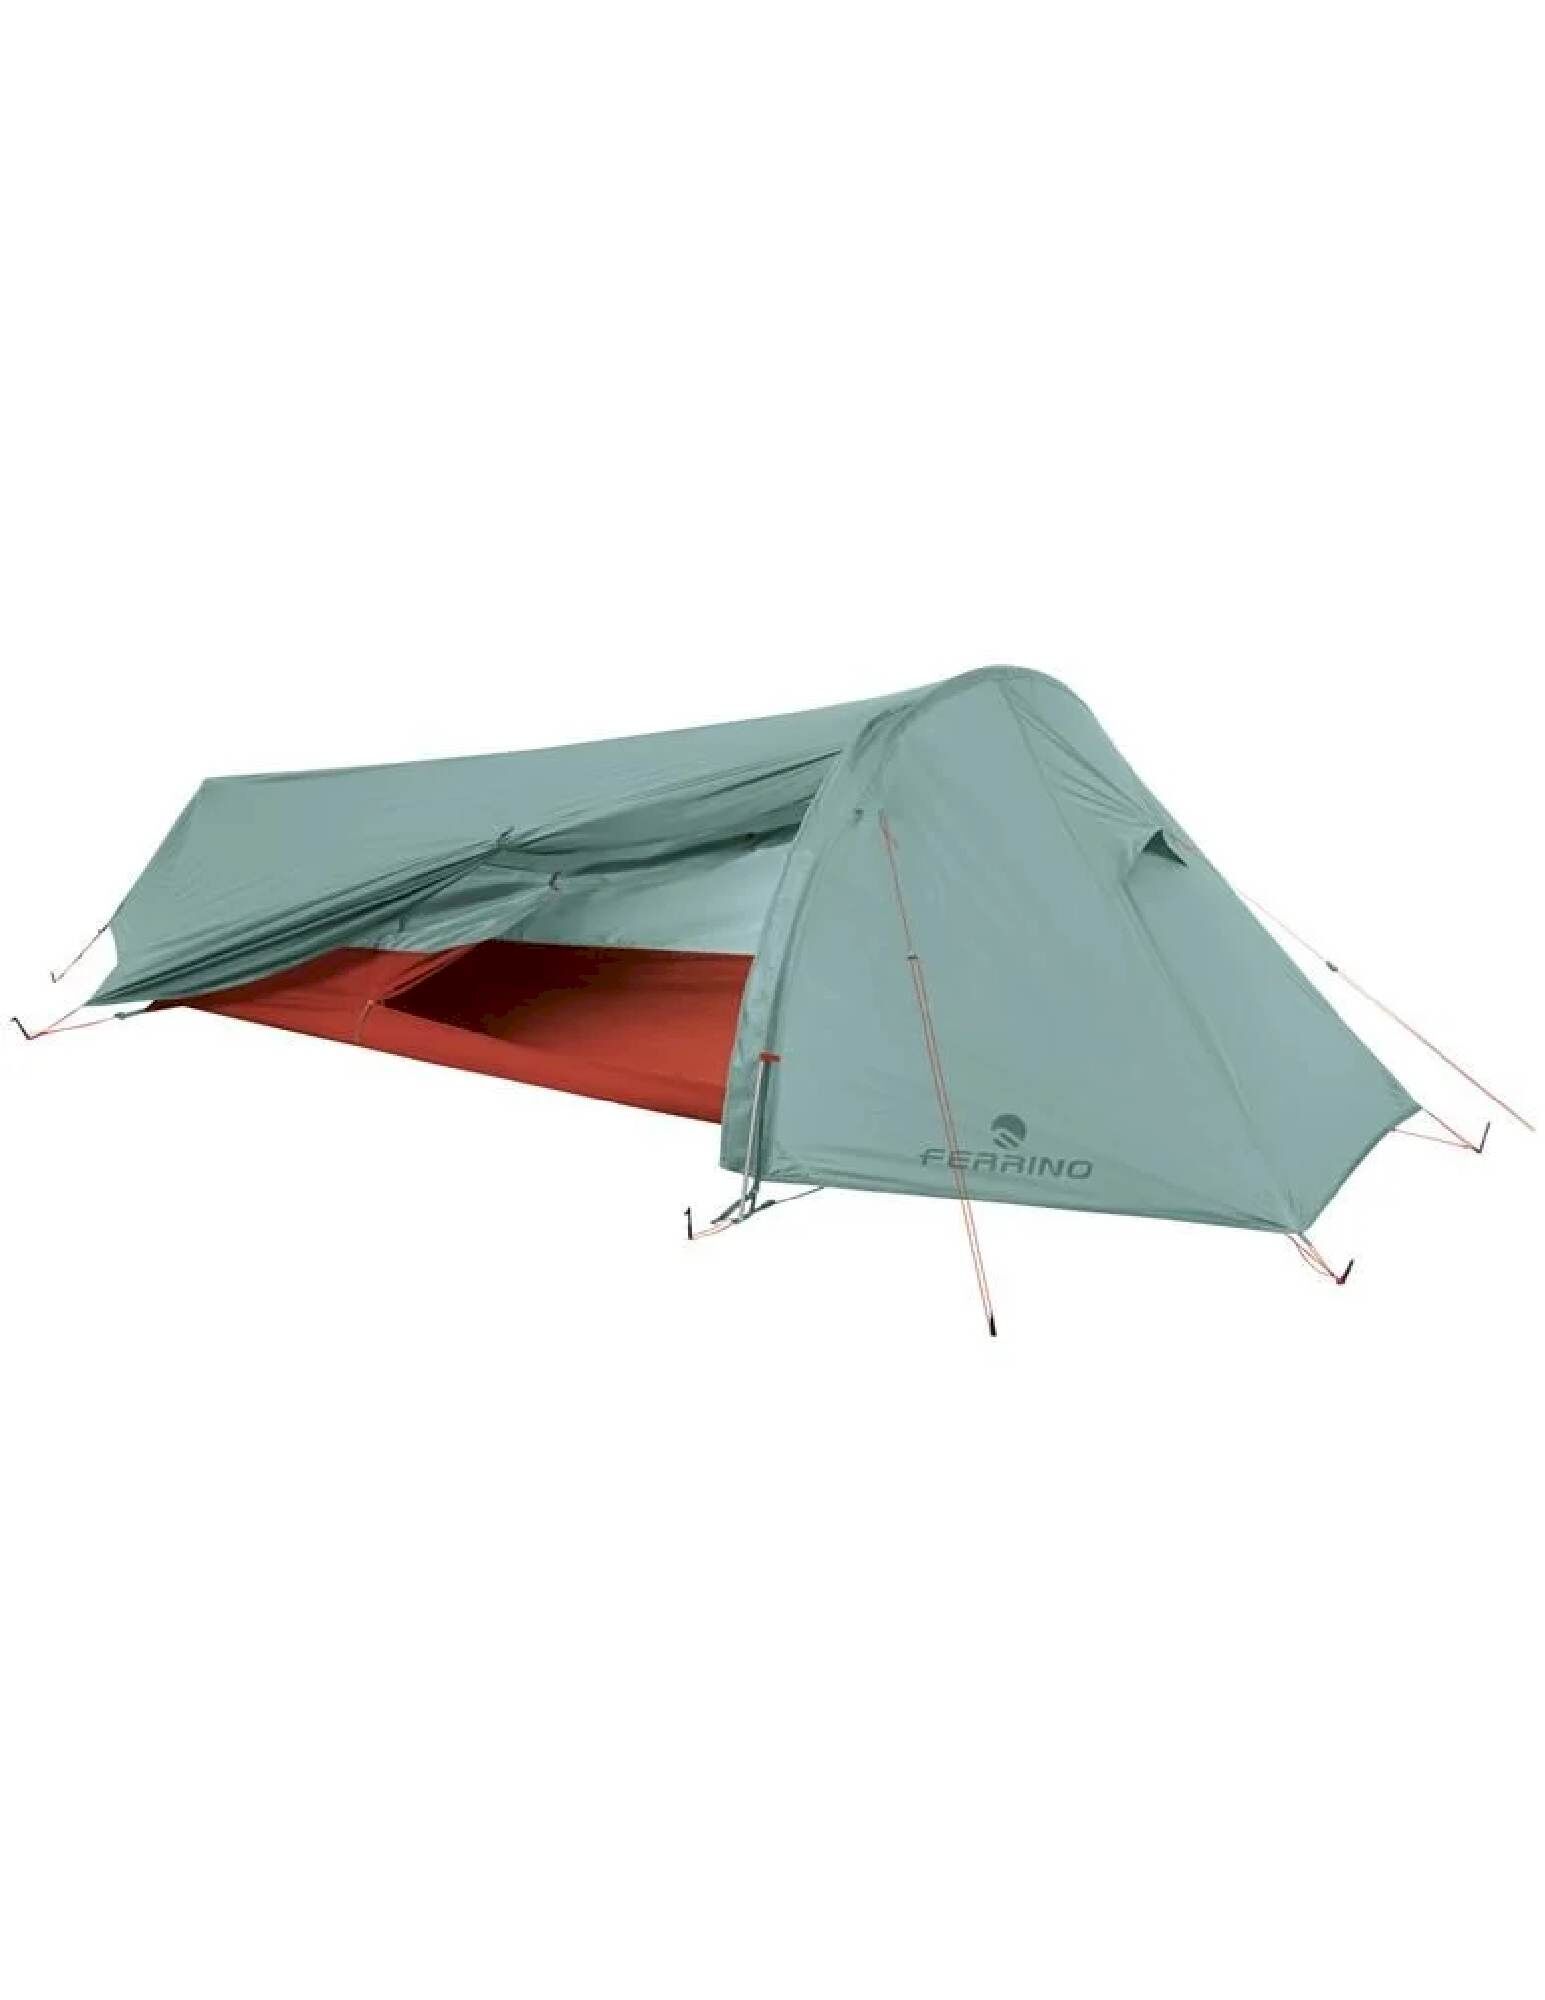 Ferrino Piuma 1 - Tenda da campeggio | Hardloop